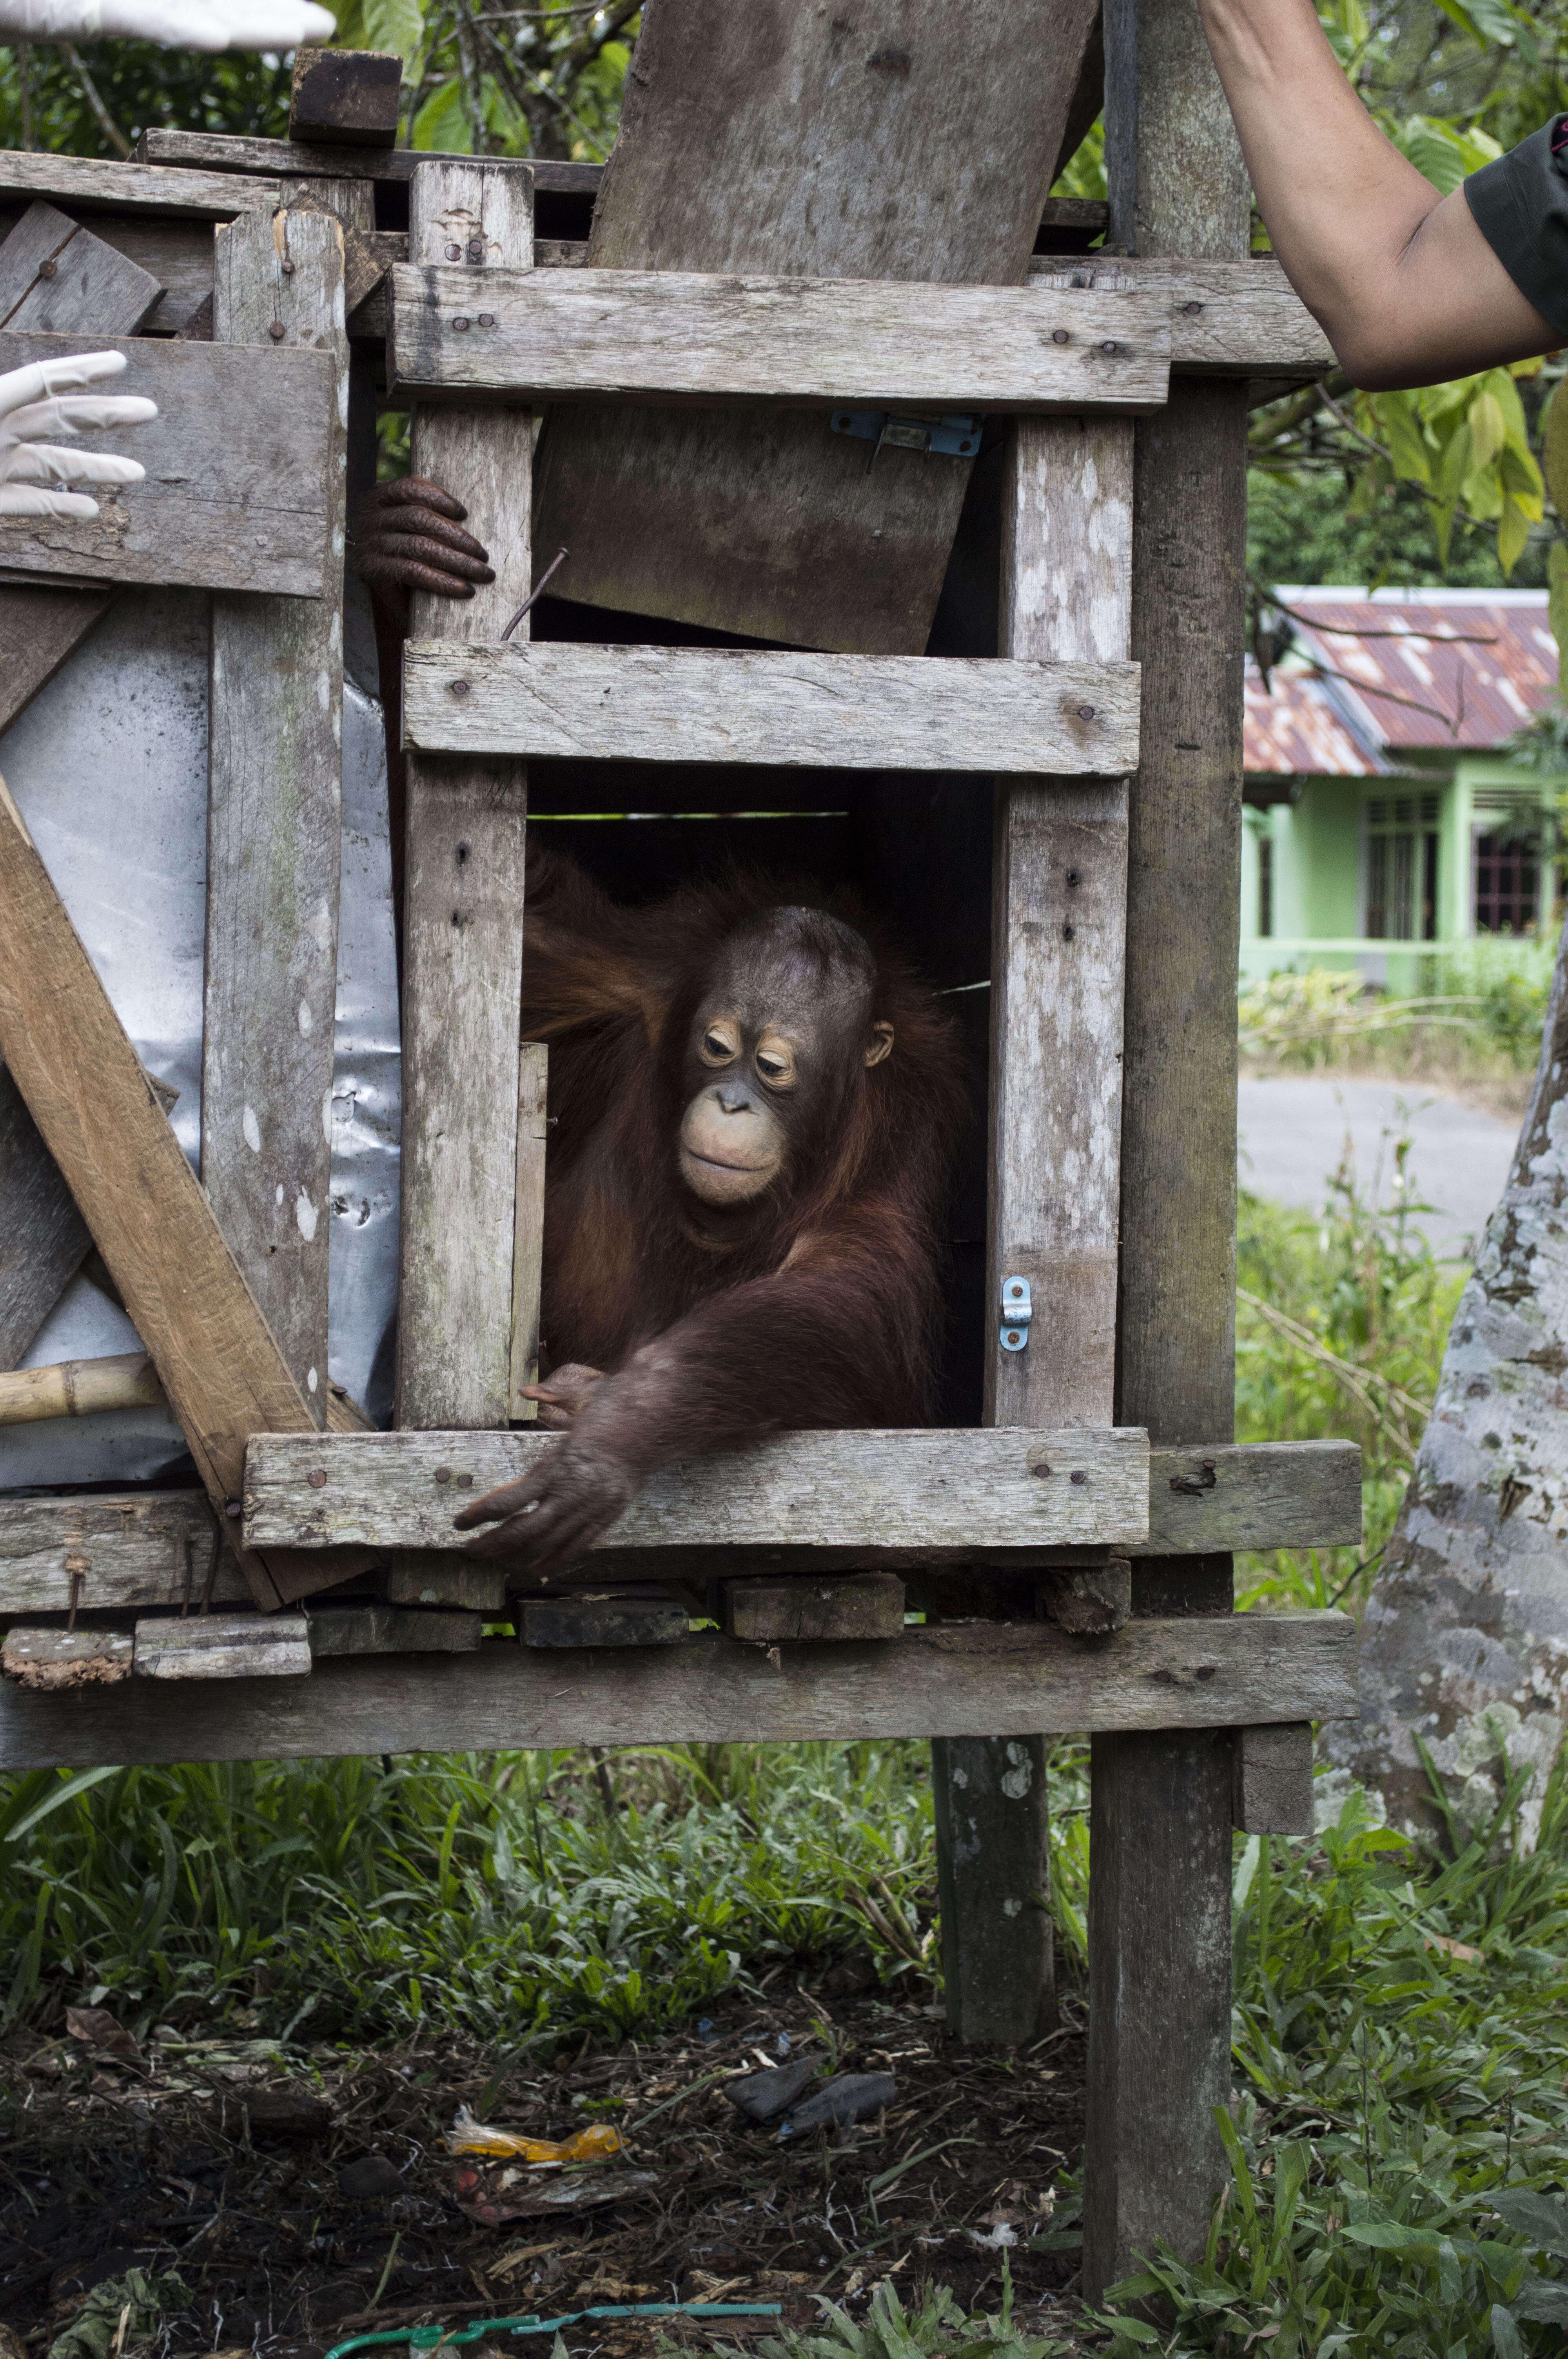 Baby orangtuan being kept inside box